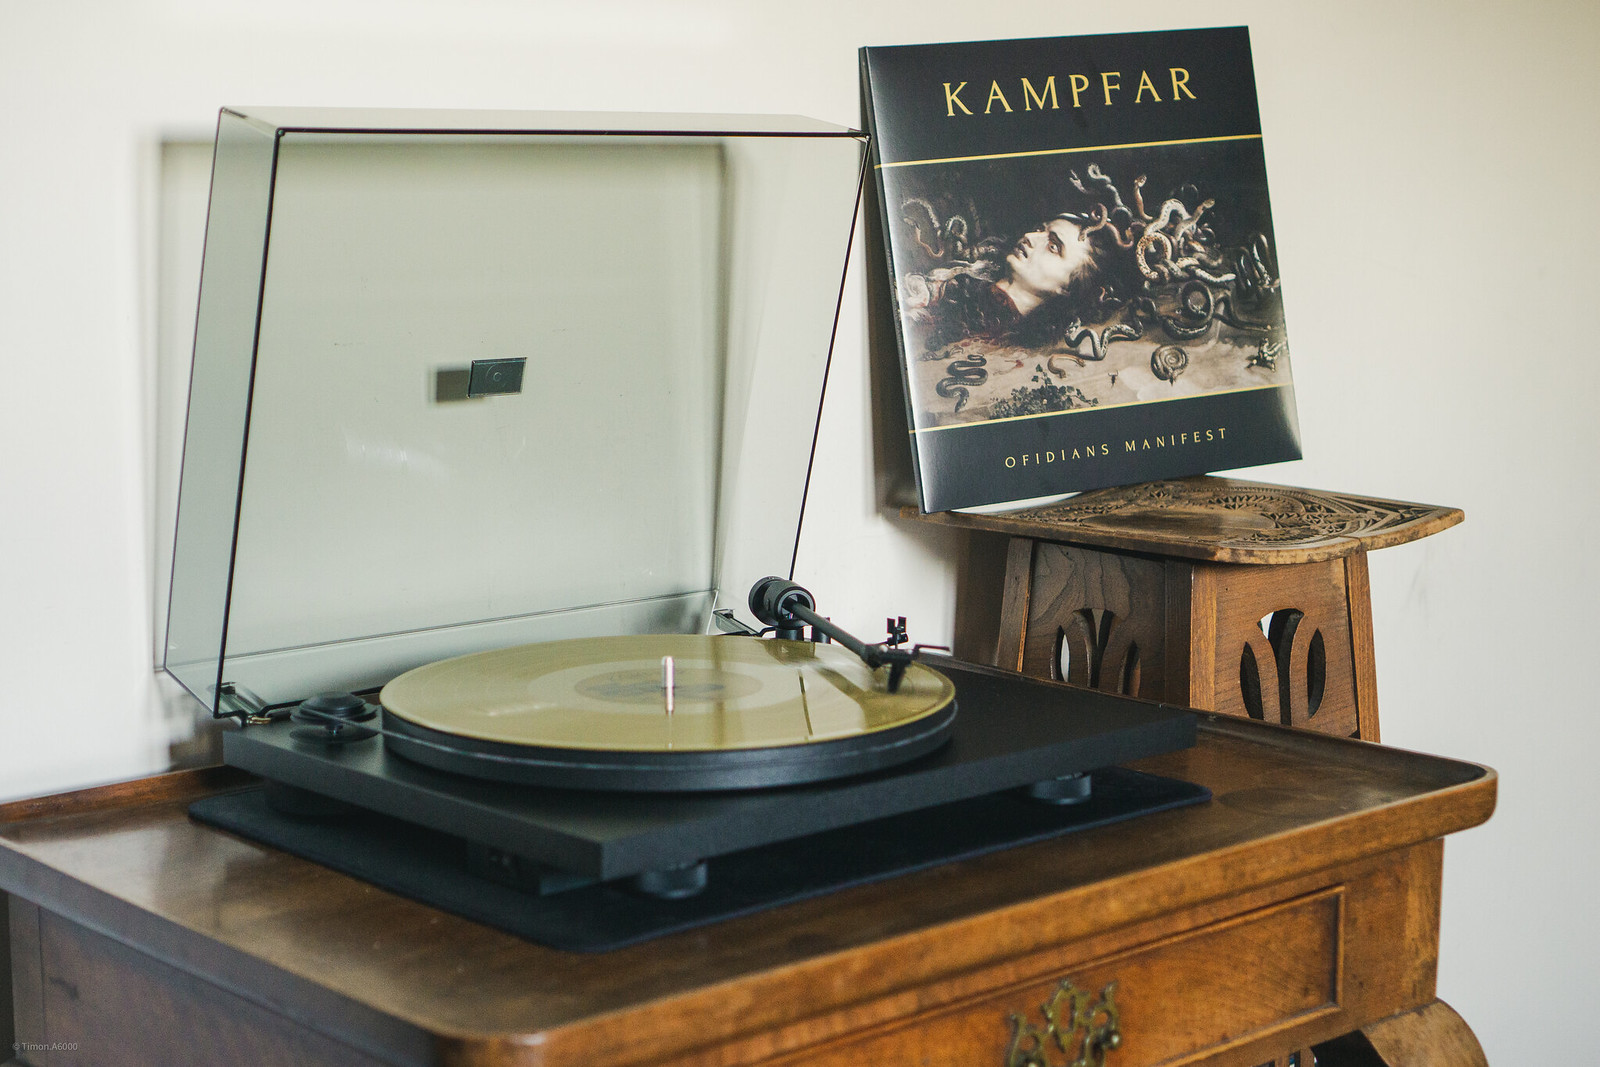 Vinyl - Ofidians Manifest - Kampfar